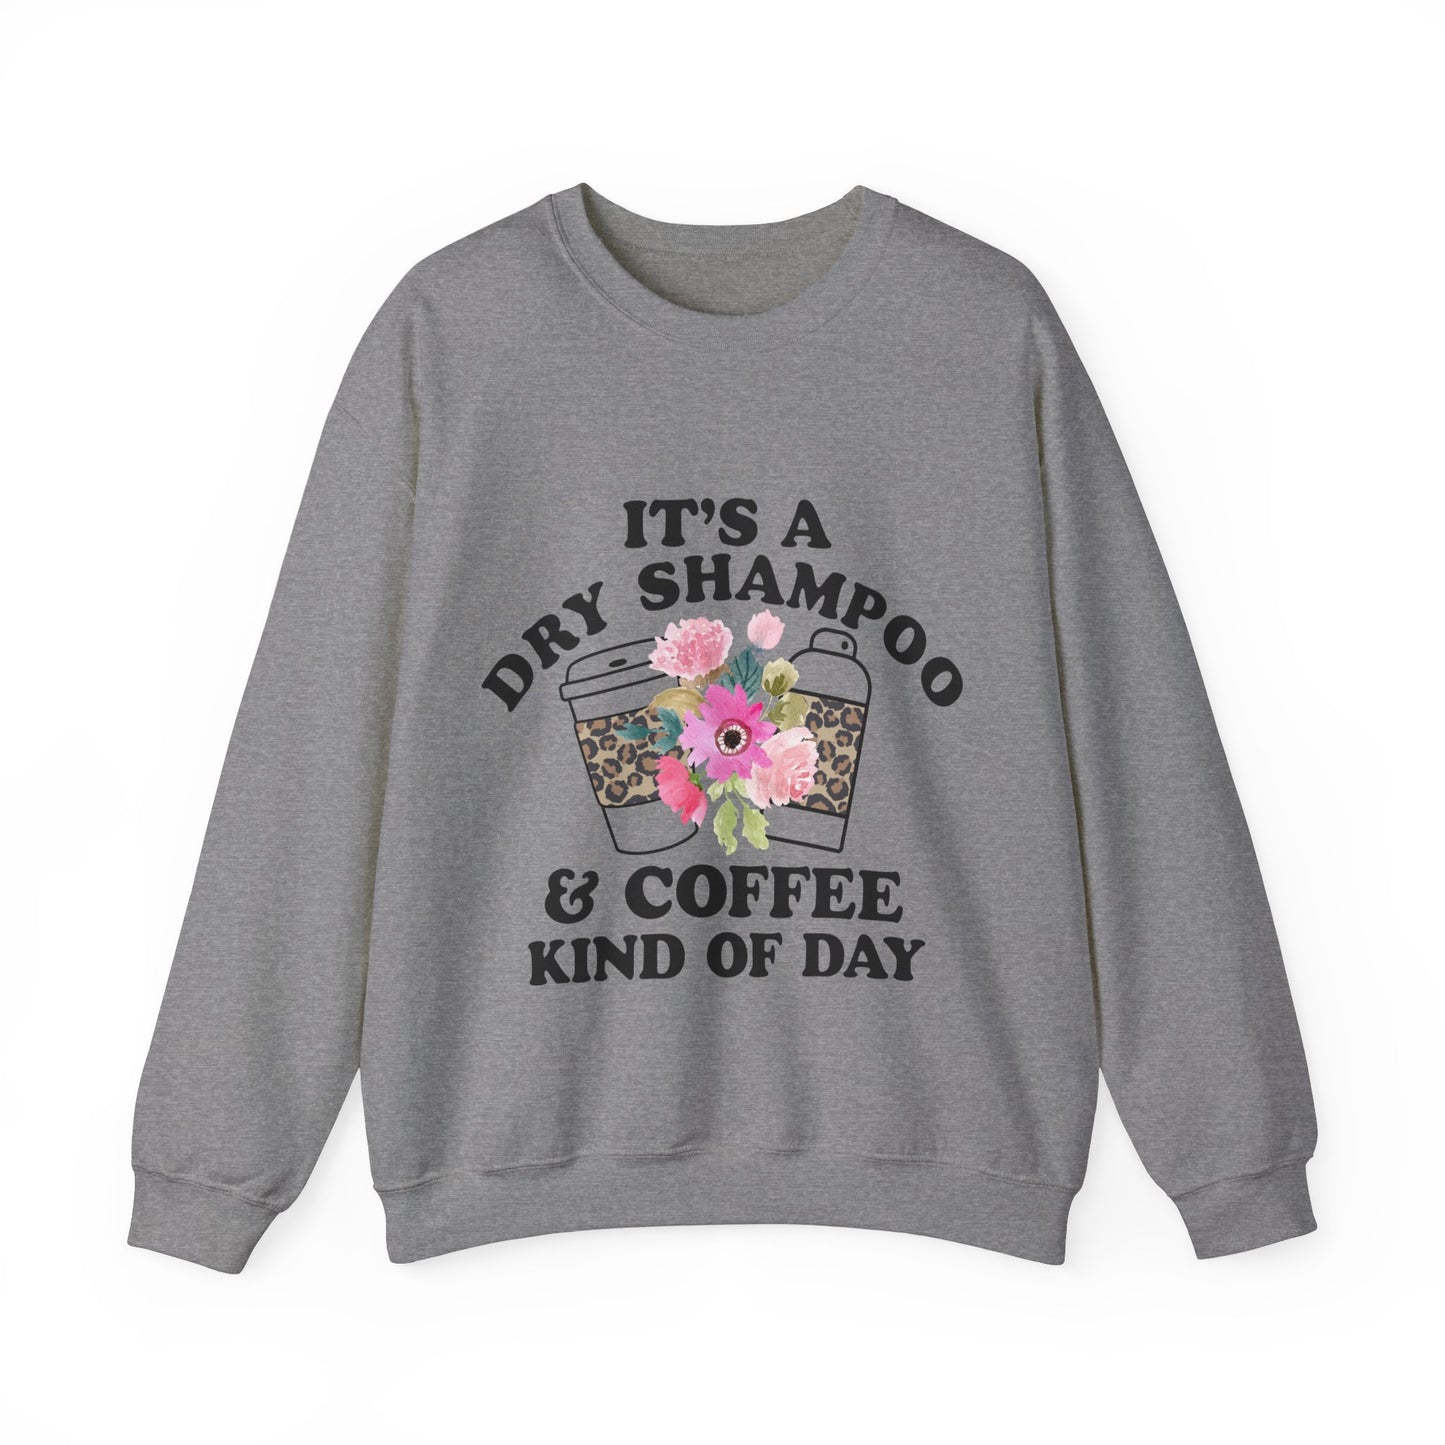 Dry Shampoo and Coffee Kind of Day Women's Crewneck Gildan Sweatshirt